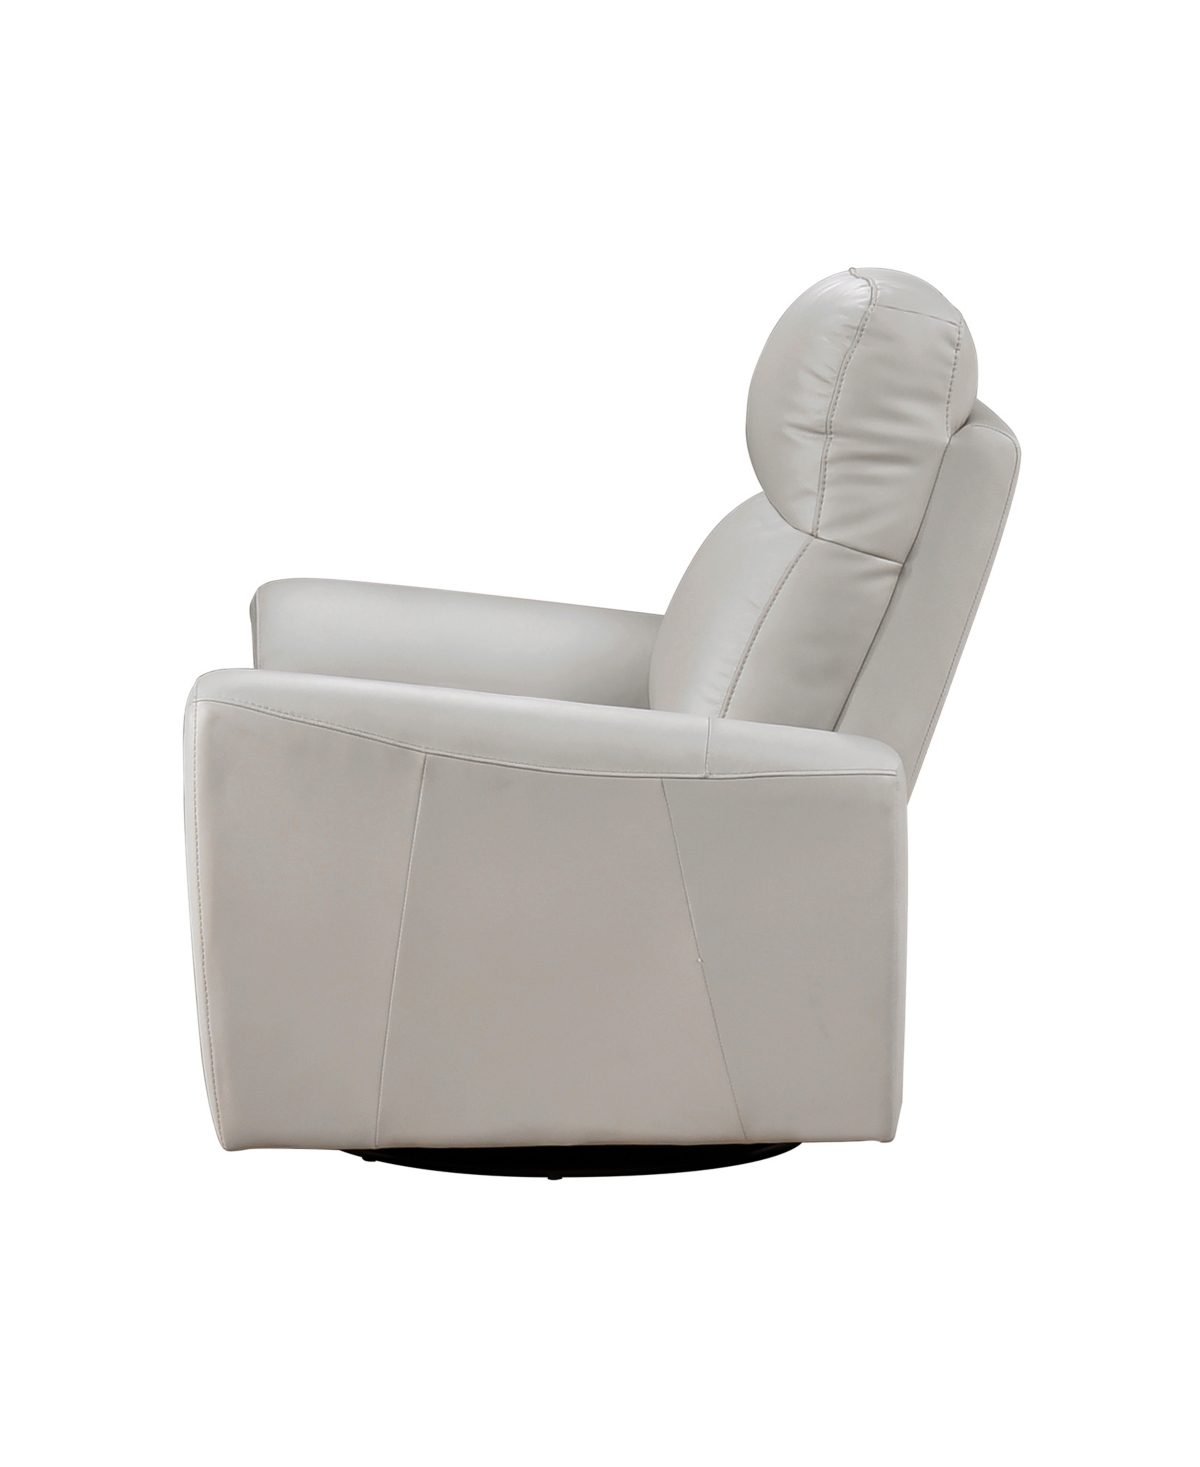 Shop Homelegance White Label Brennen 39" Leather Match Swivel Glider Chair In Gray